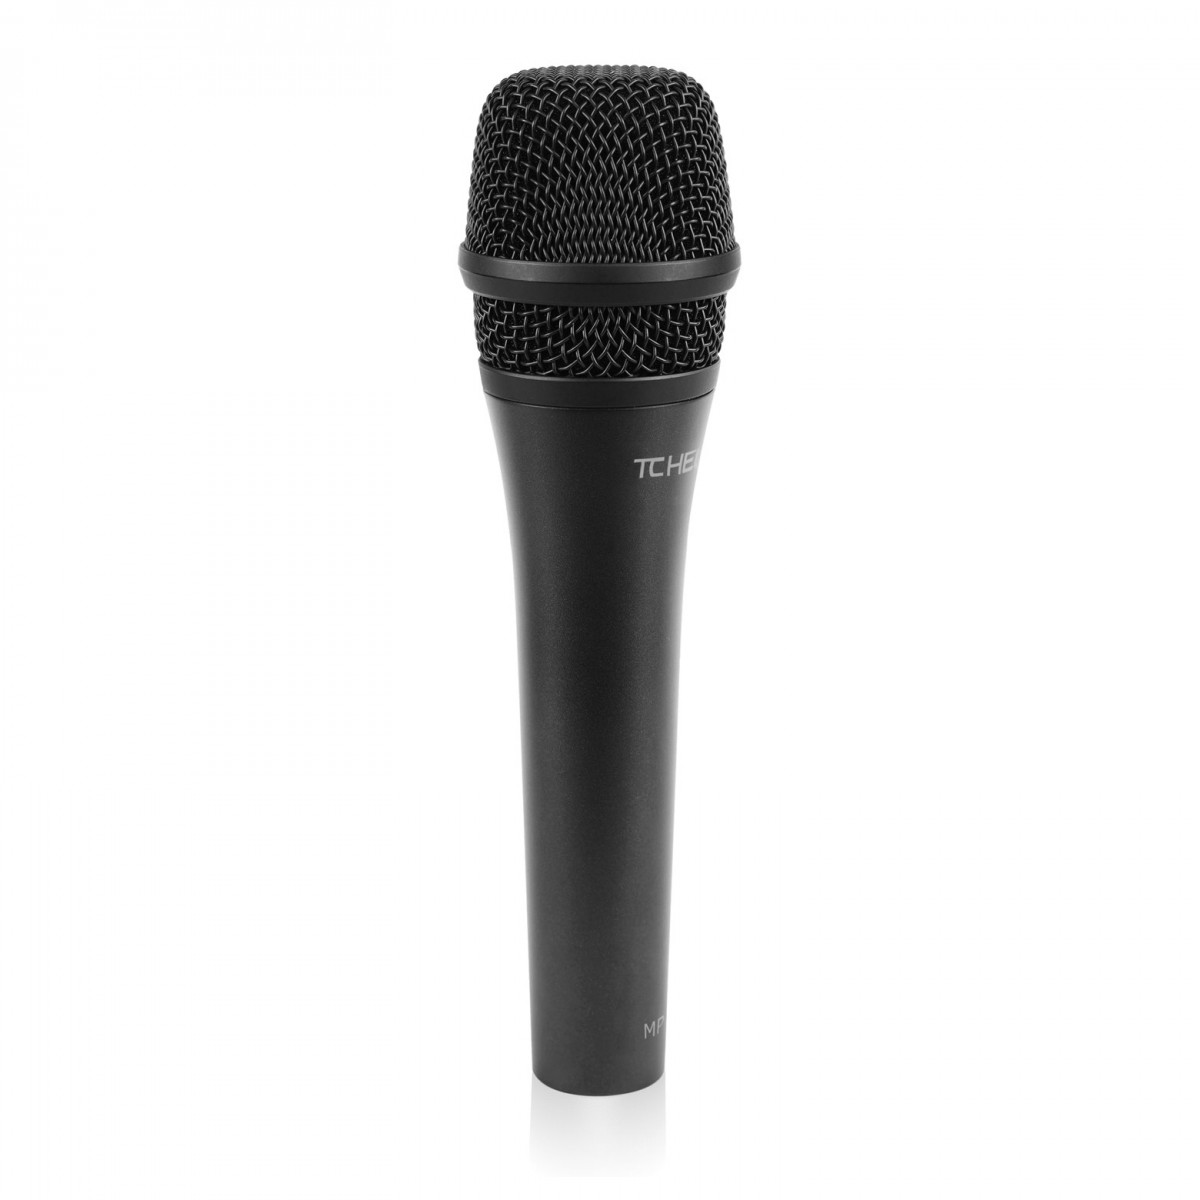 Динамический микрофон TC HELICON MP-60